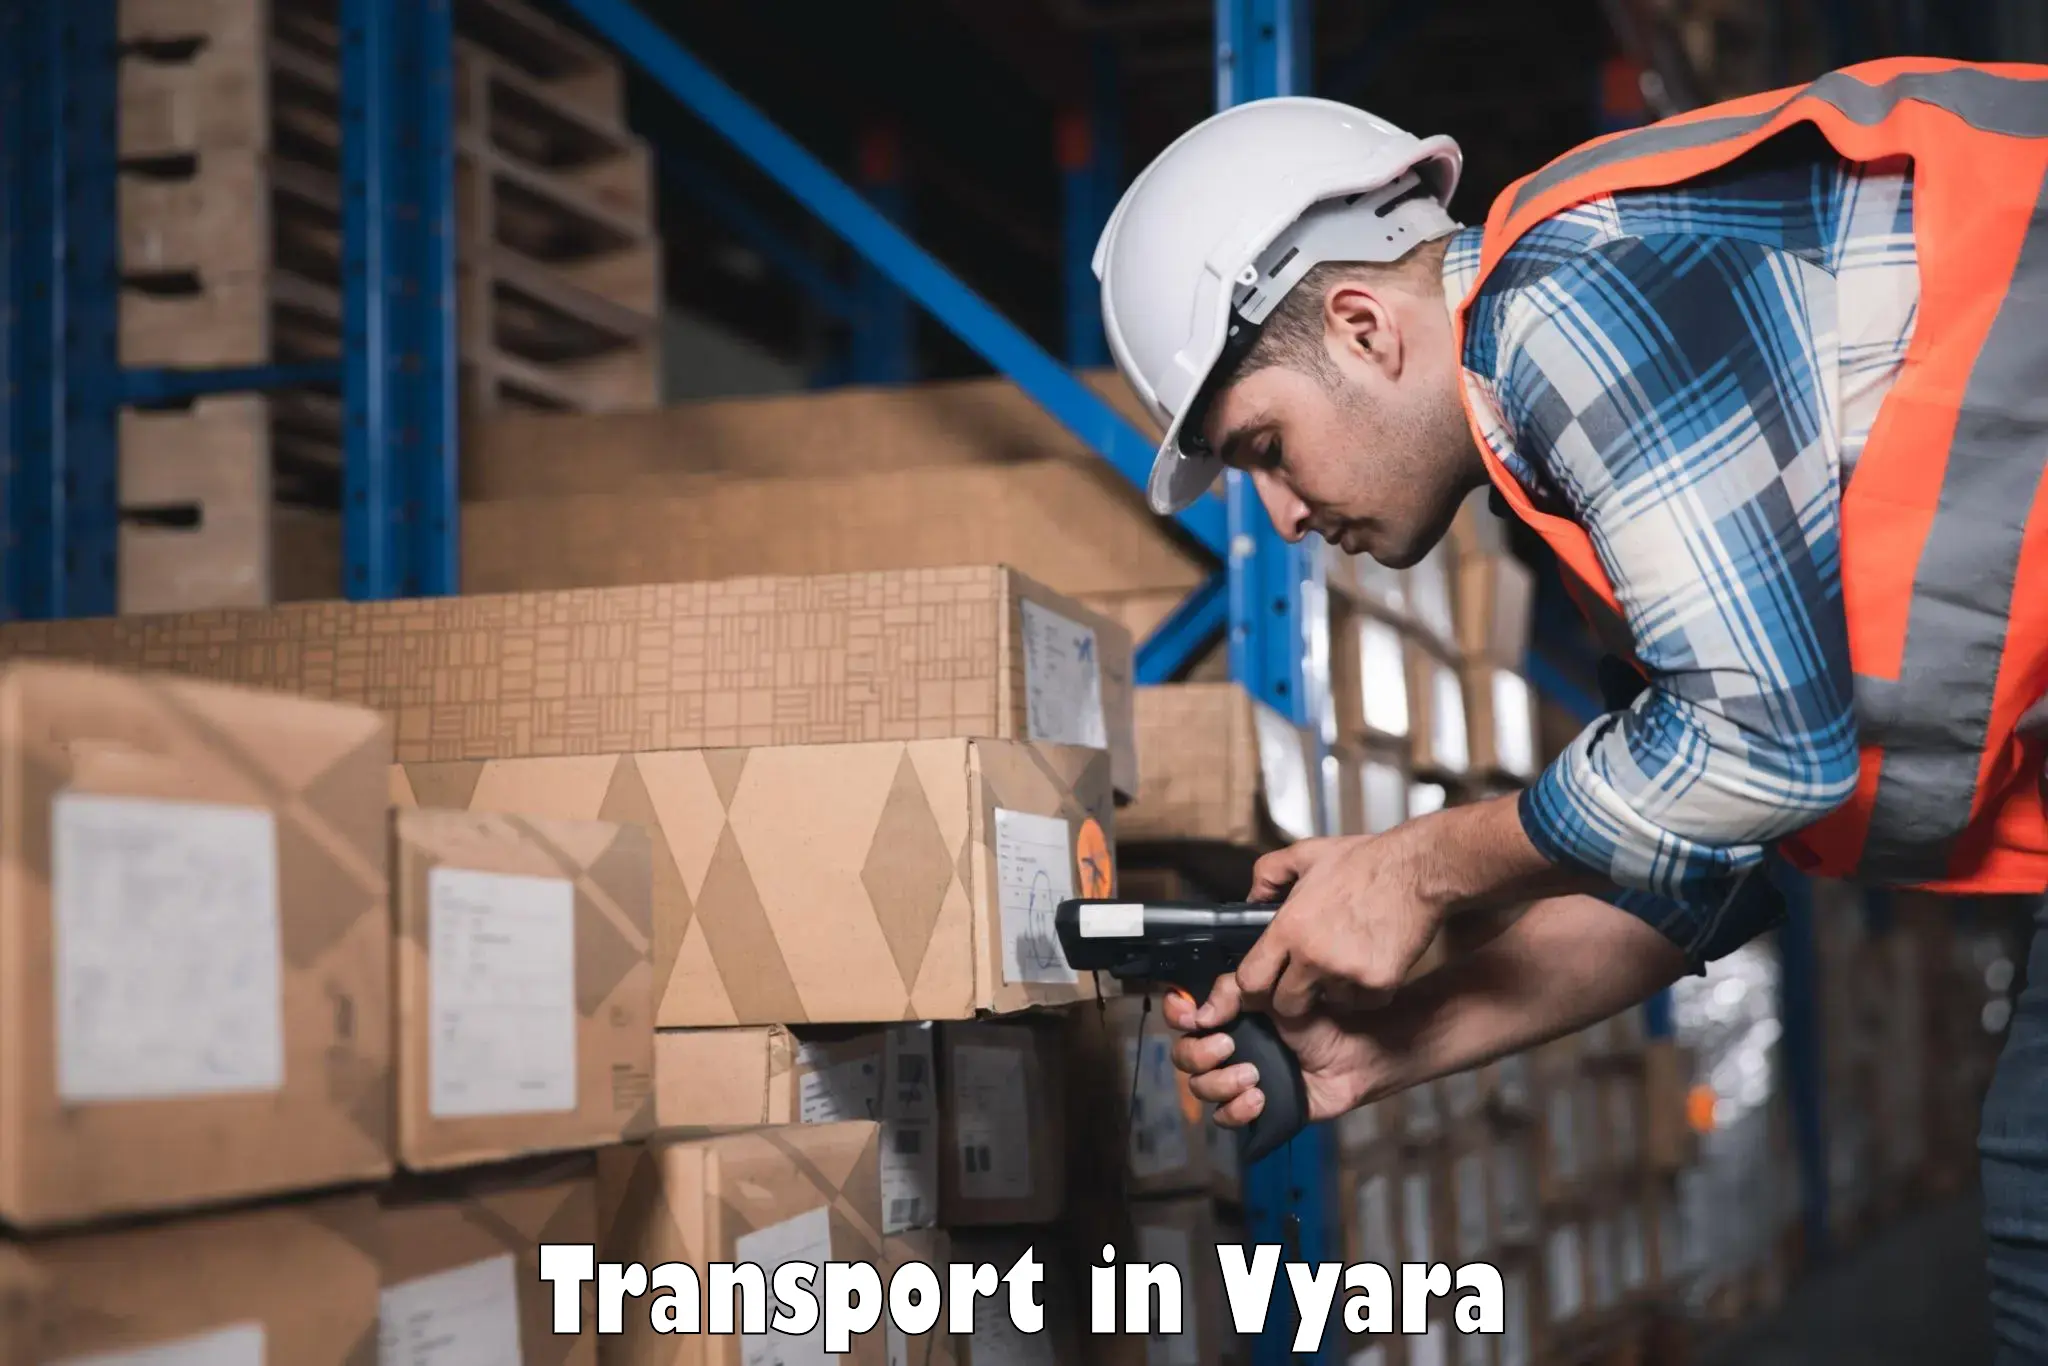 Express transport services in Vyara